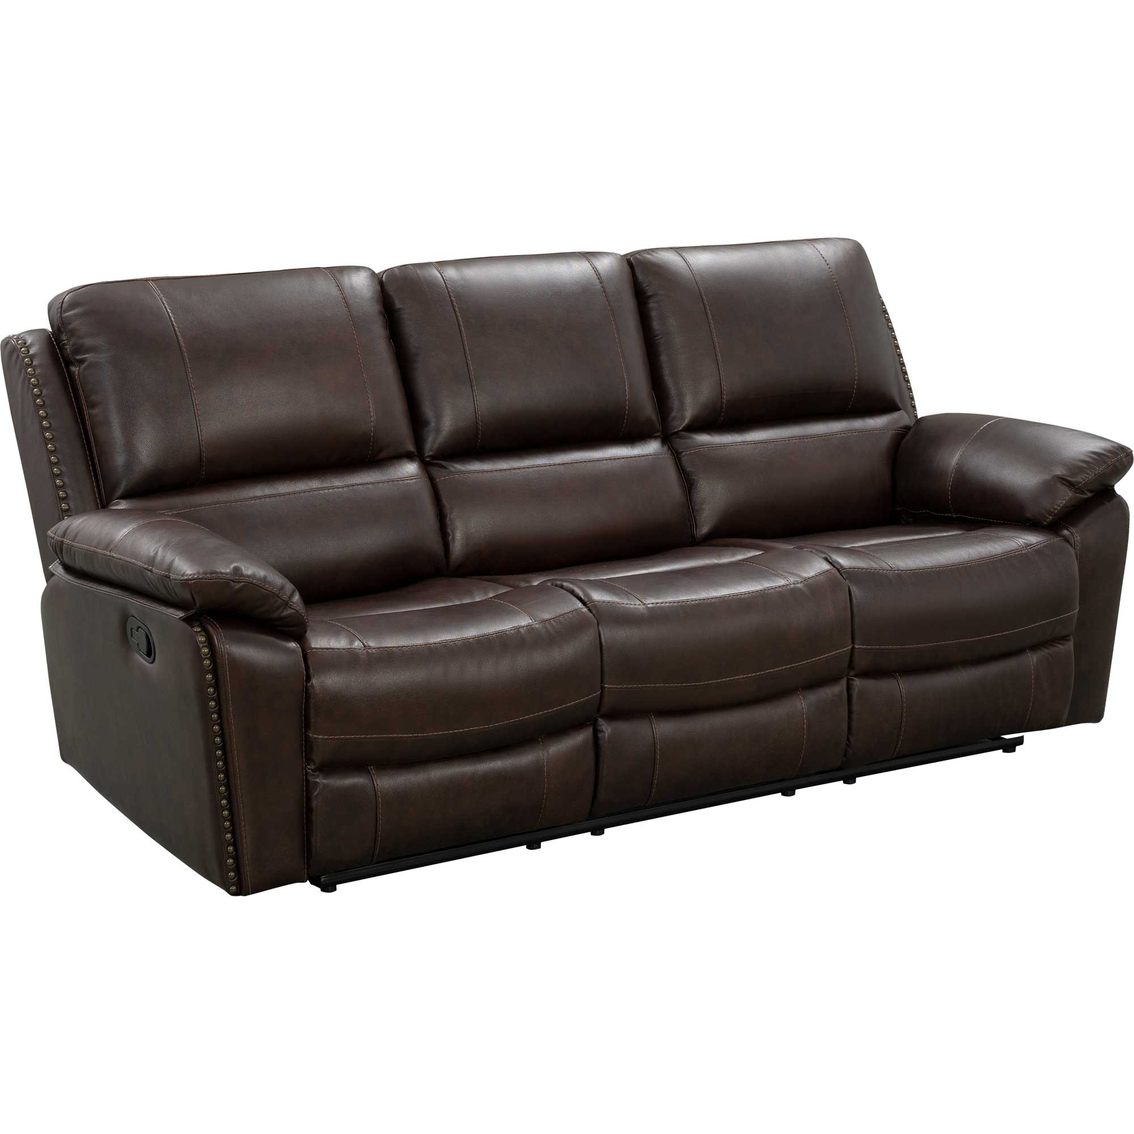 Abbyson Sorento Leather Reclining Sofa